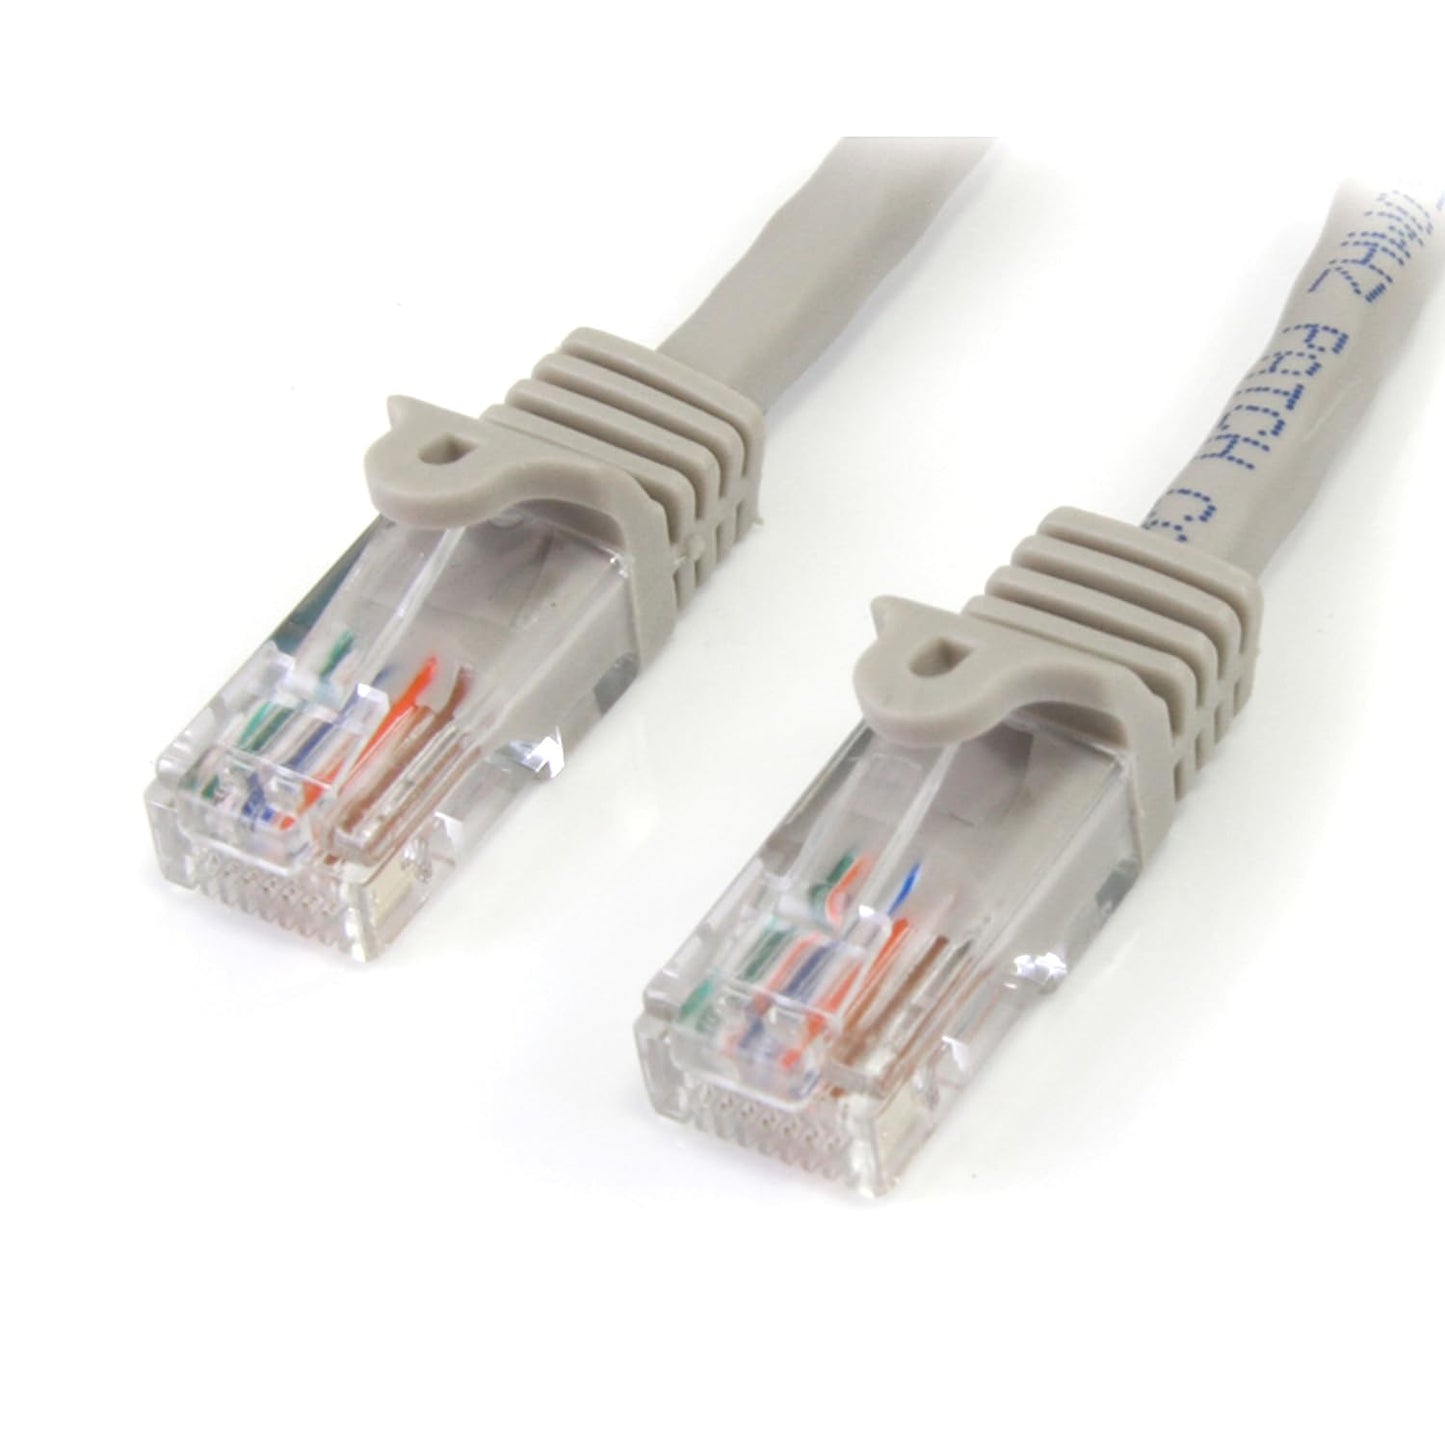 StarTech.com Cat5e Patch Cable with Snagless RJ45 Connectors - 10 ft - M/M - Gray